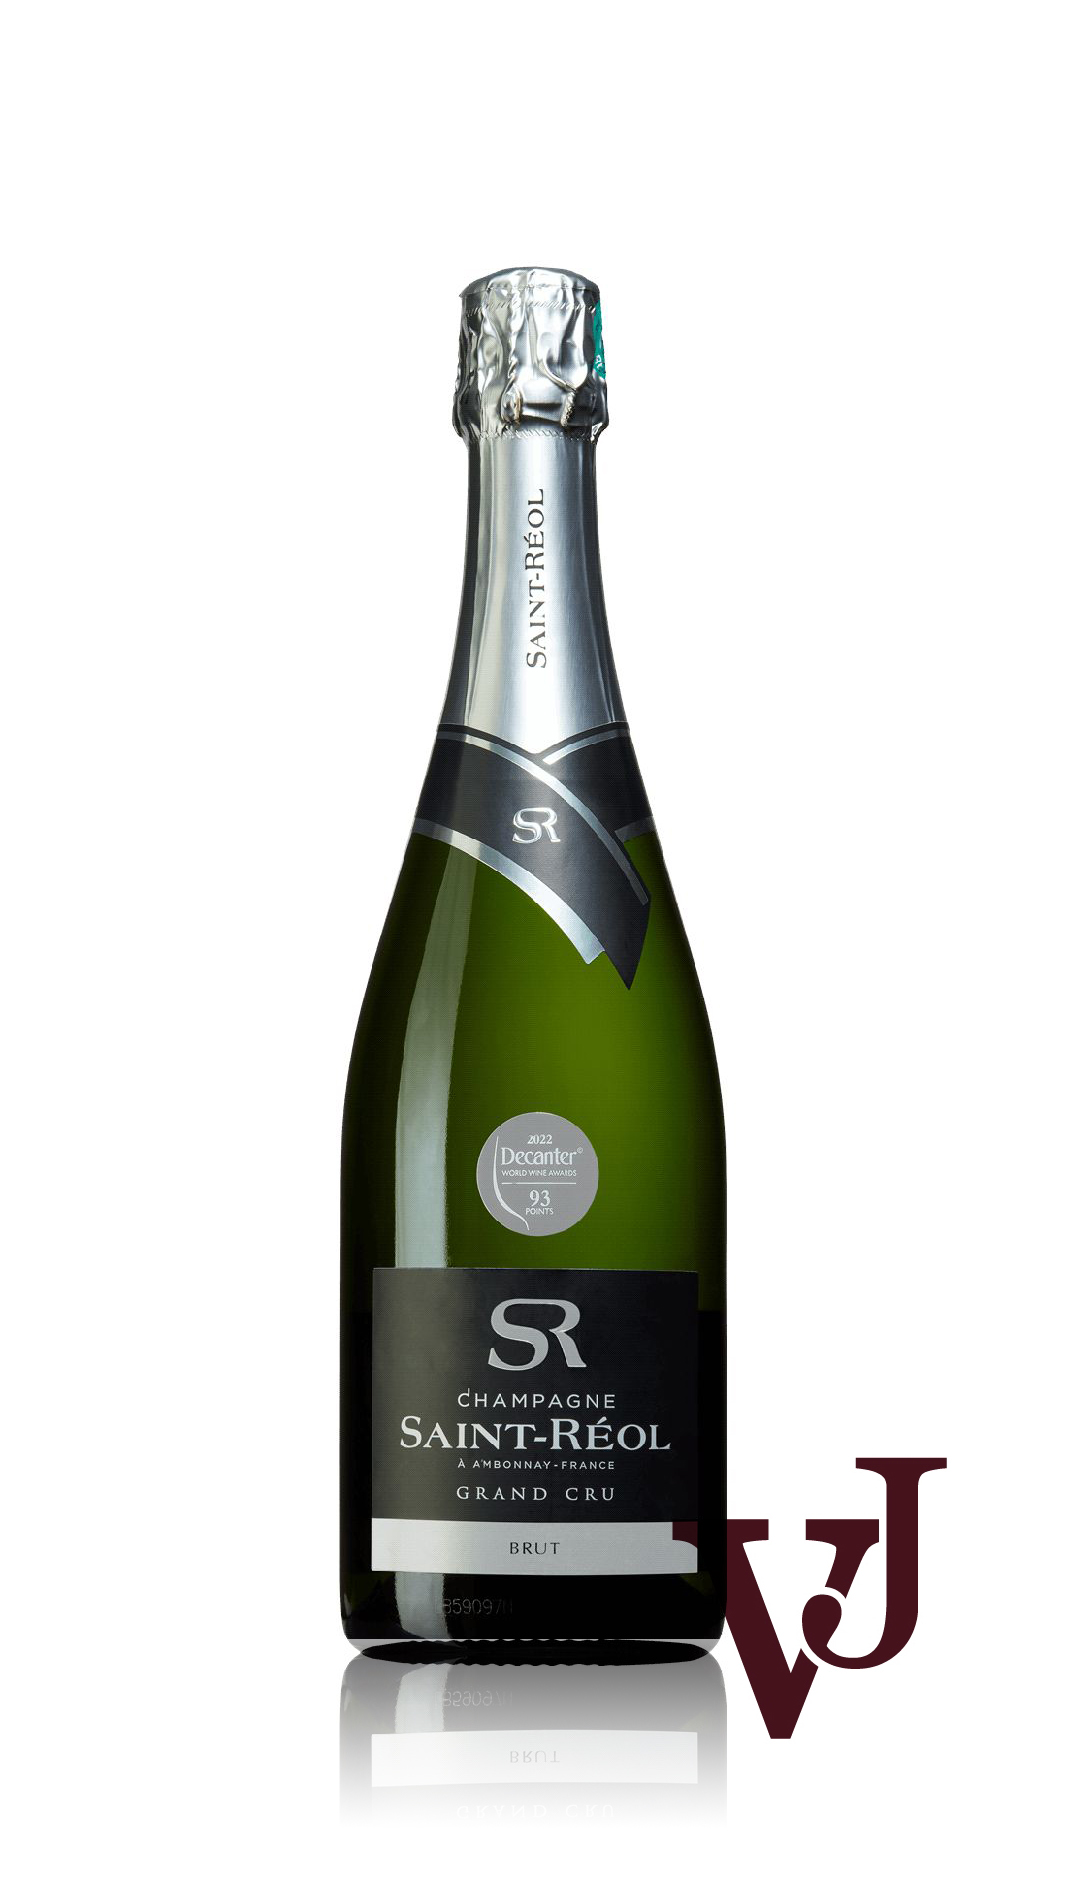 Mousserande Vin - Saint-Réol Grand Cru Brut artikel nummer 9002401 från producenten Champagne Saint Reol från området Frankrike